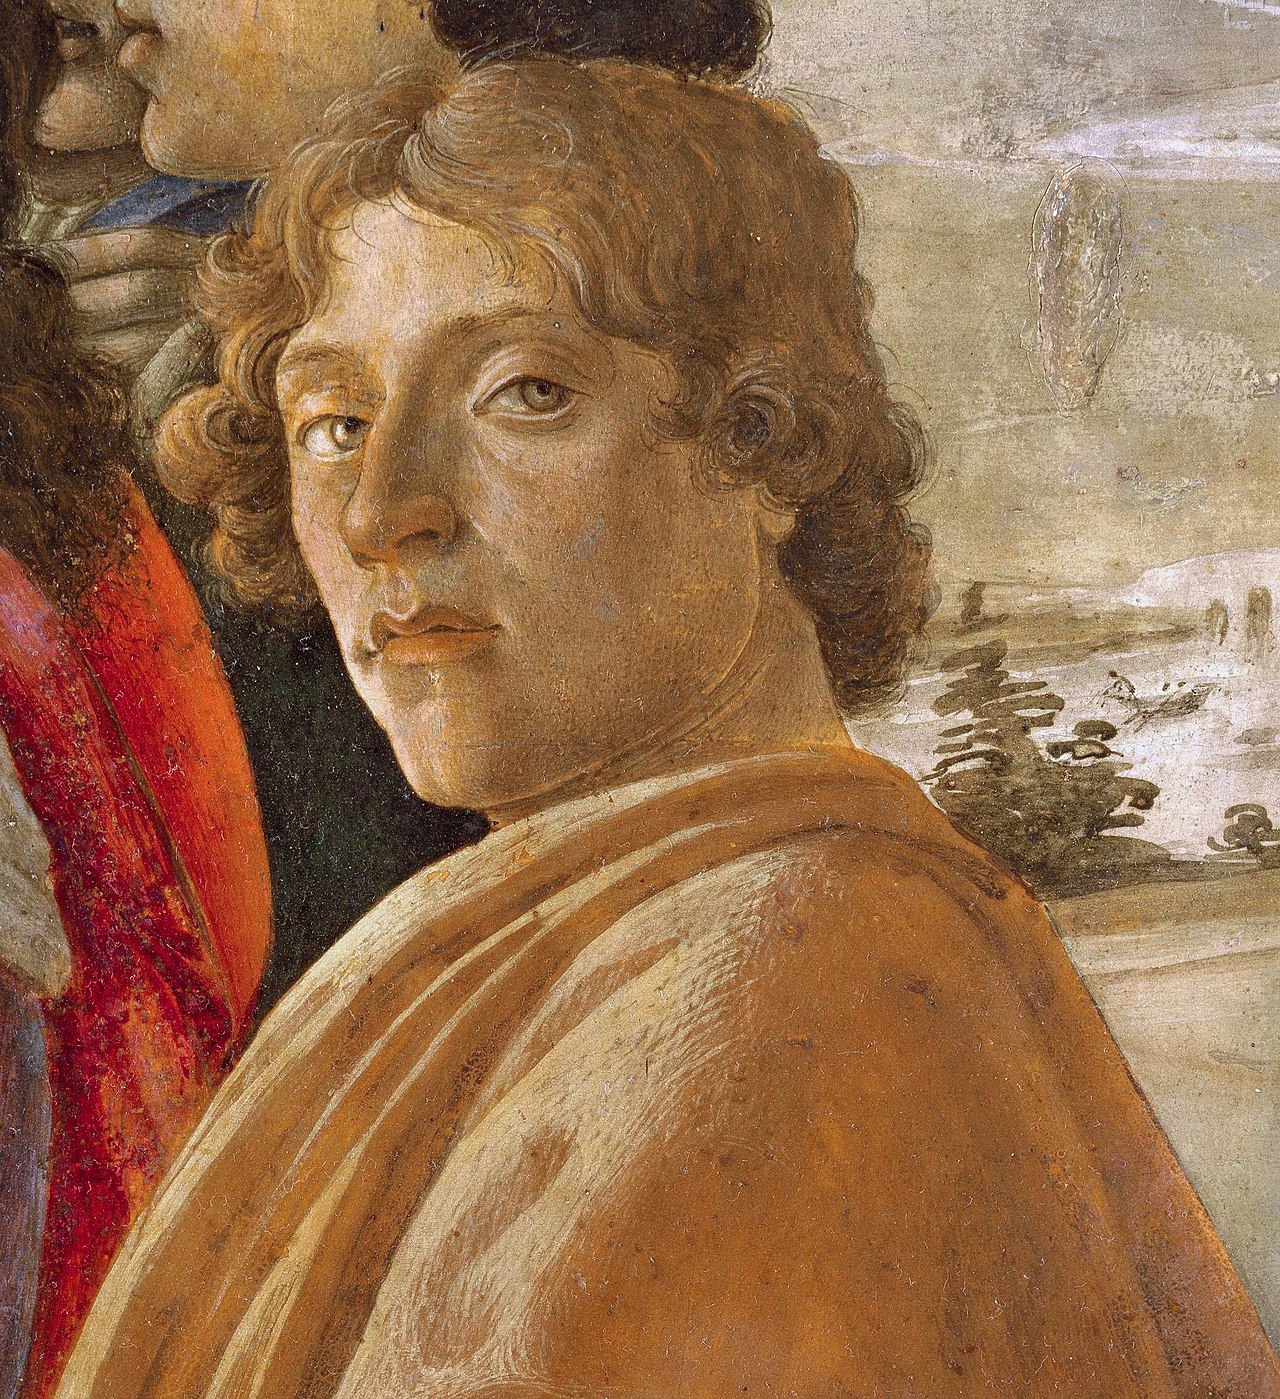 A self-portrait of renowned Italian painter, Sandro Botticelli